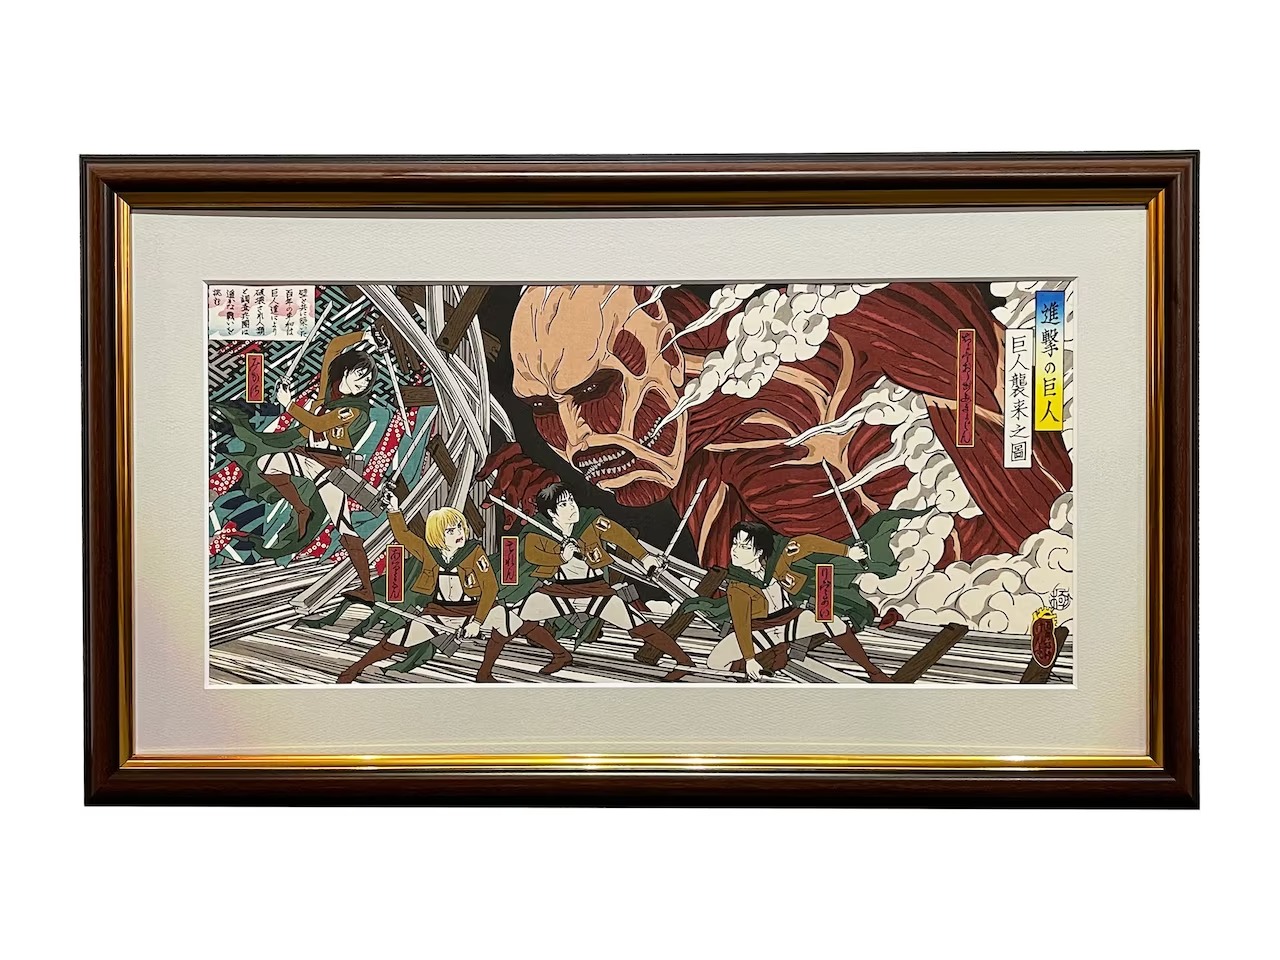 Attack on Titan ukiyo-e design